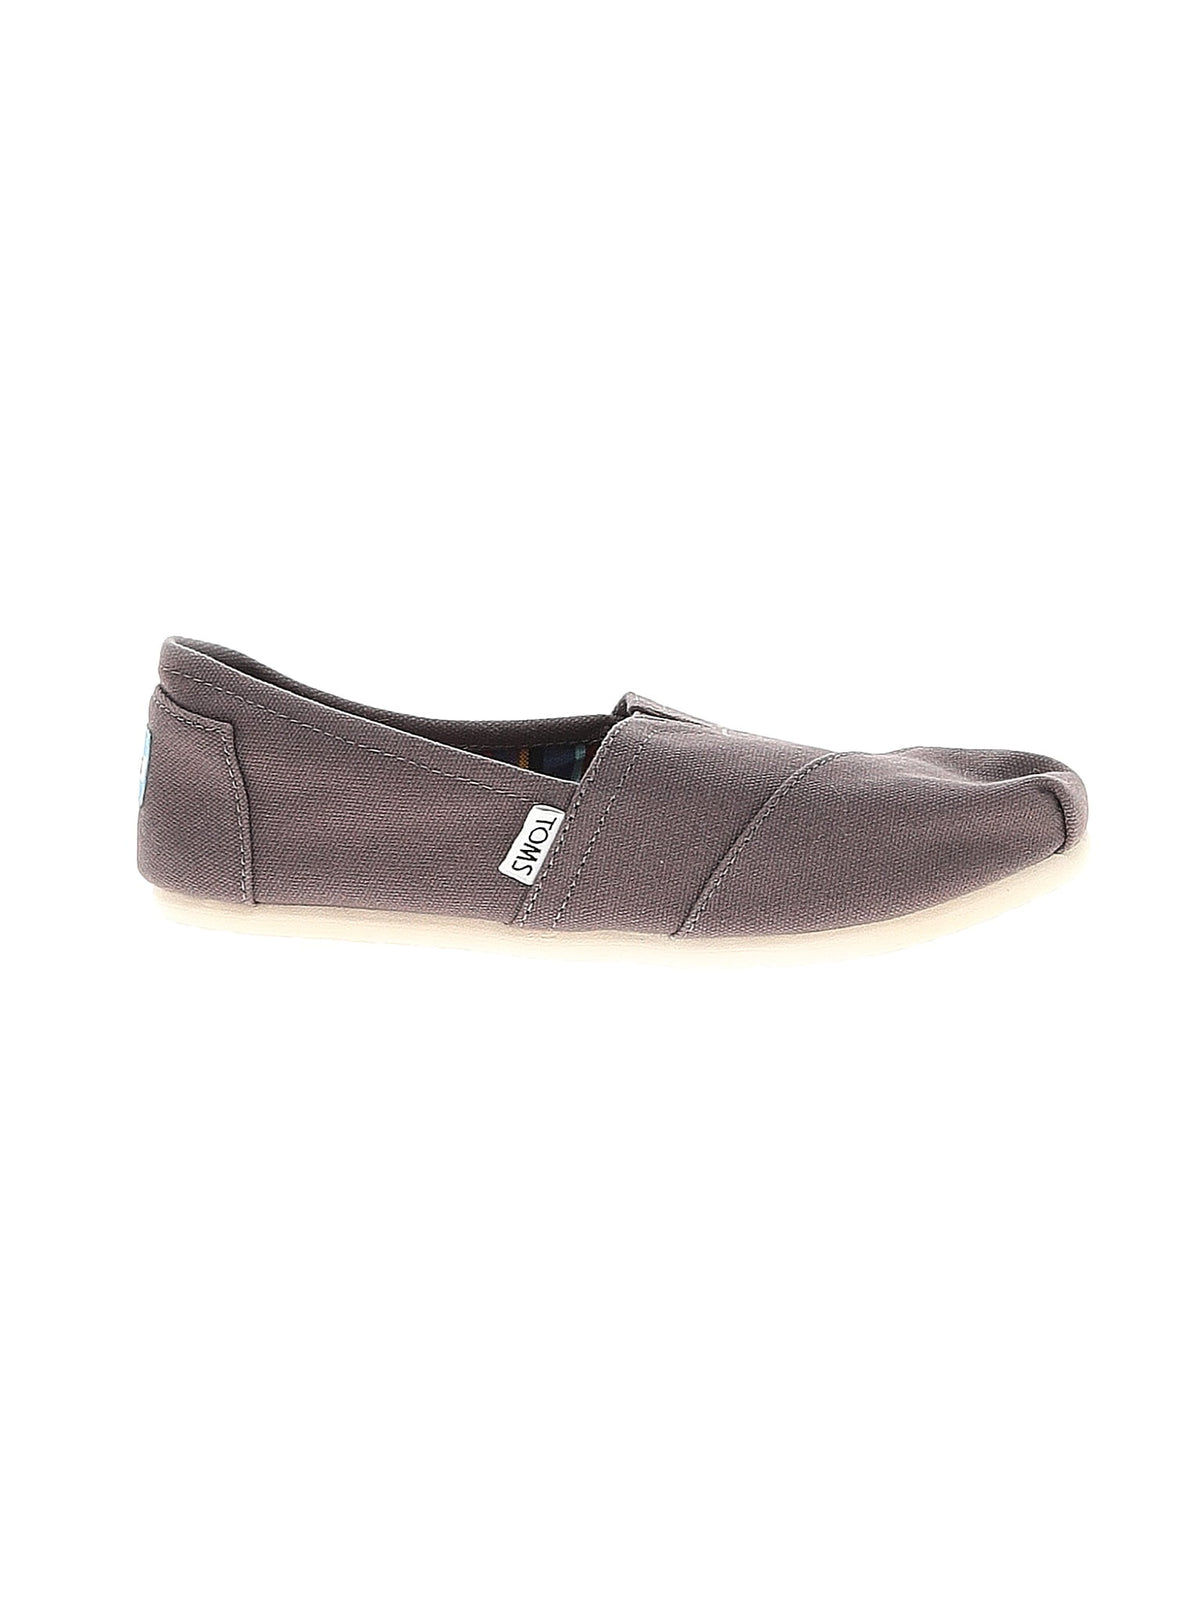 Flats shoe size - 6